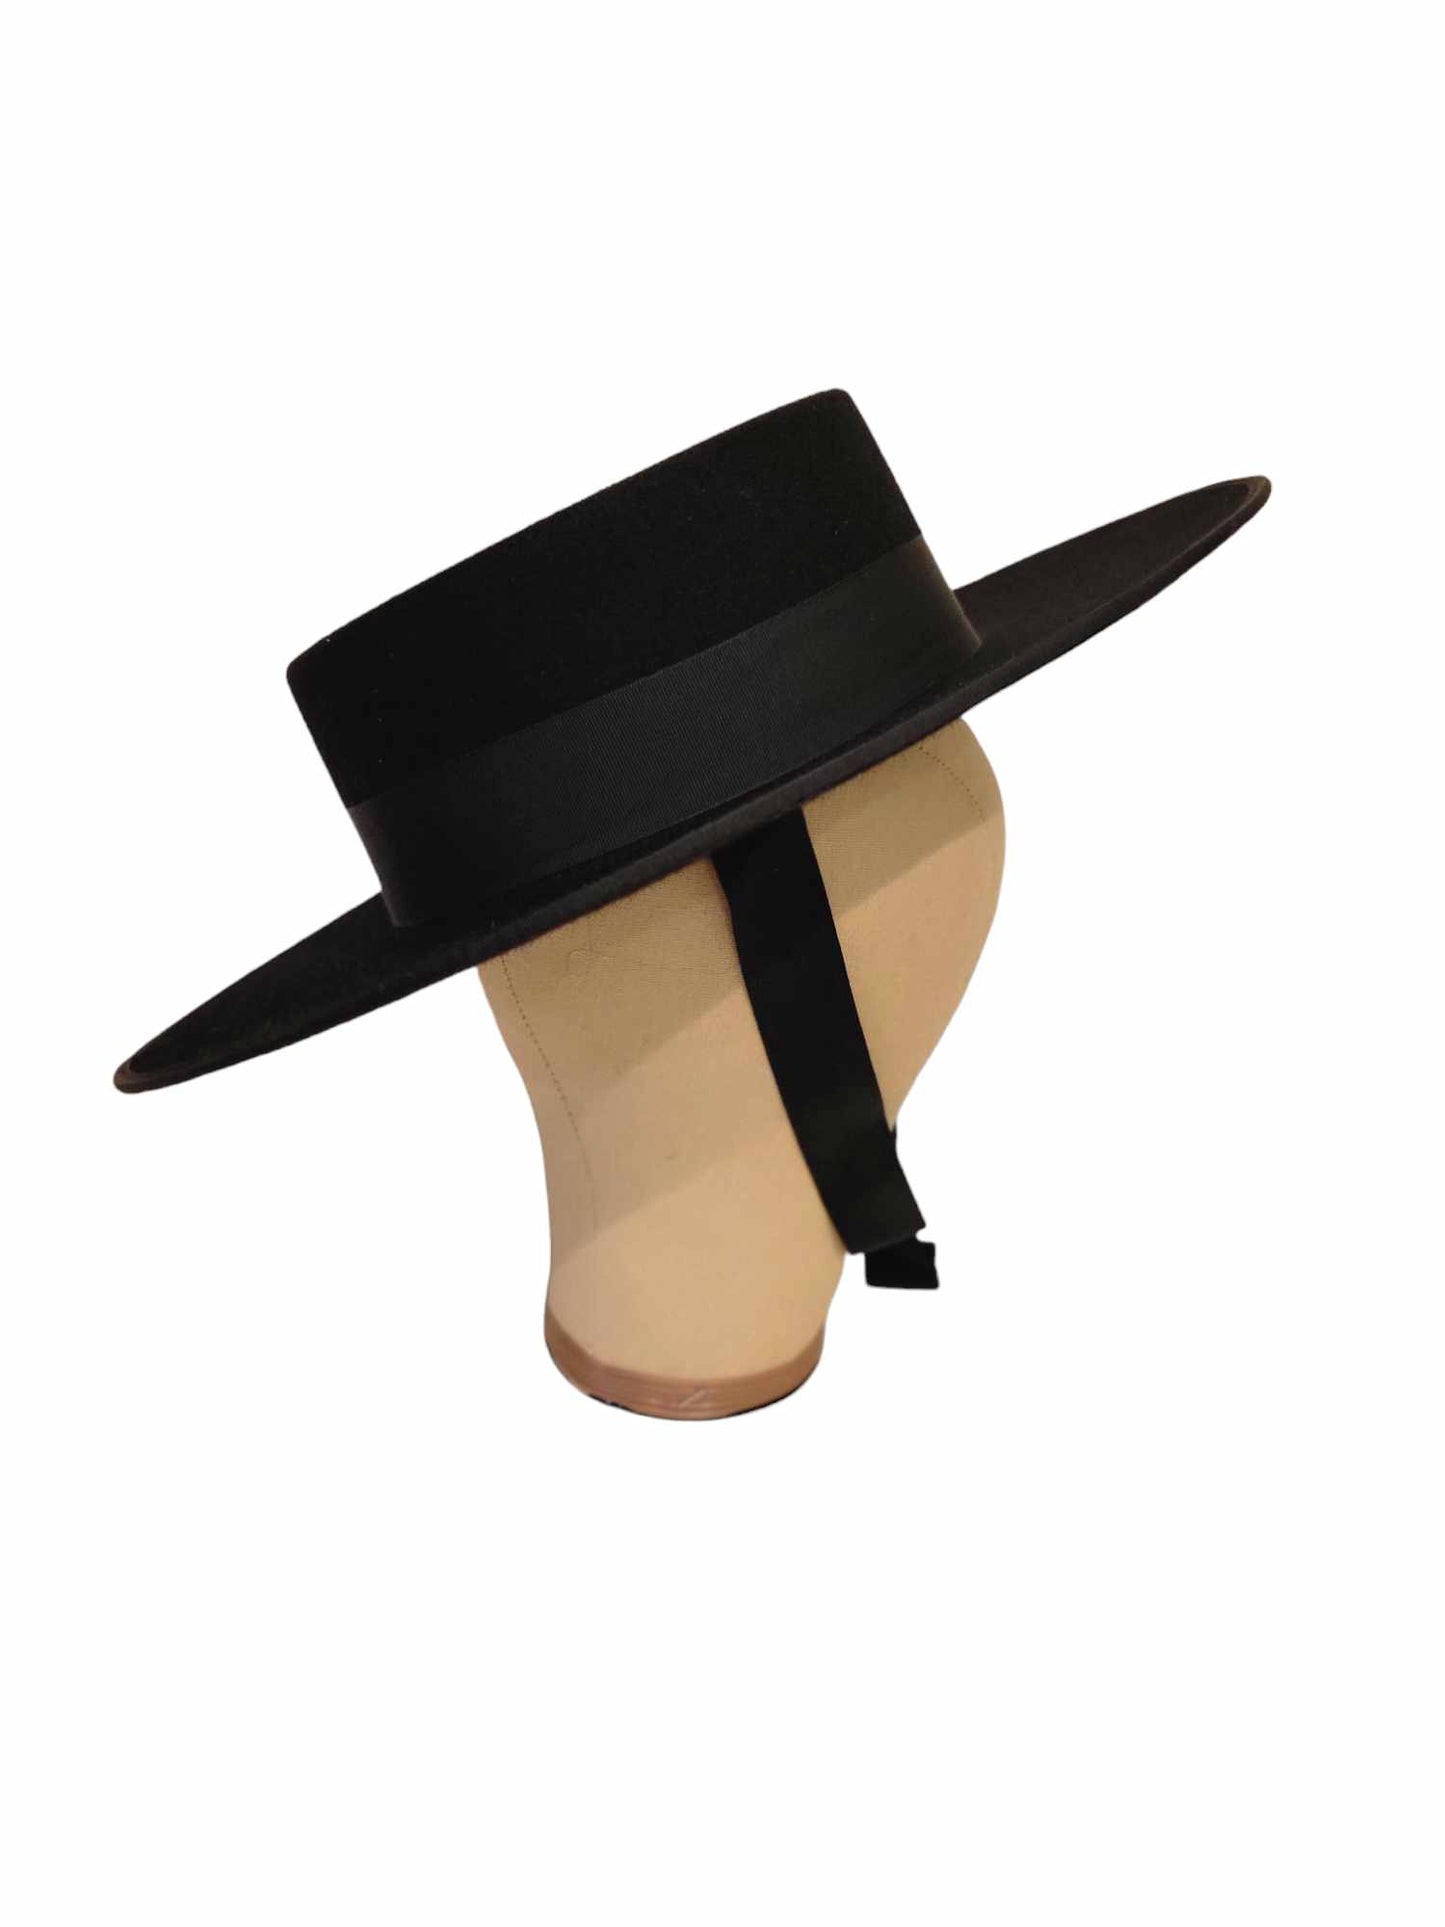 Authentic Spanish Bolero / Cordobes / Gaucho Hat